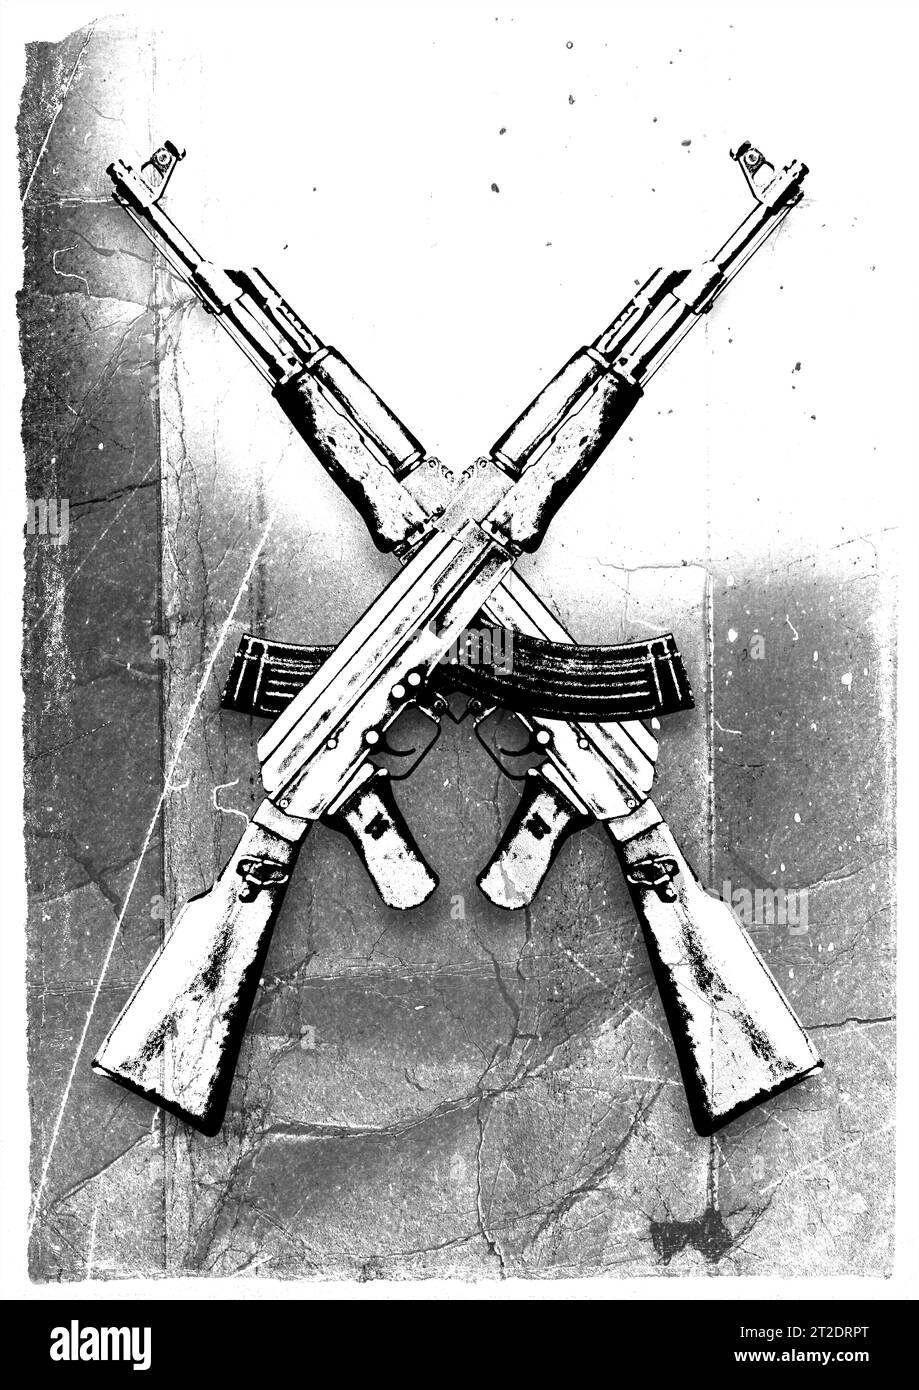 AK 47 poster kalashnikov military weapon terrorist war vintage say no to war conflict propaganda Stock Photo